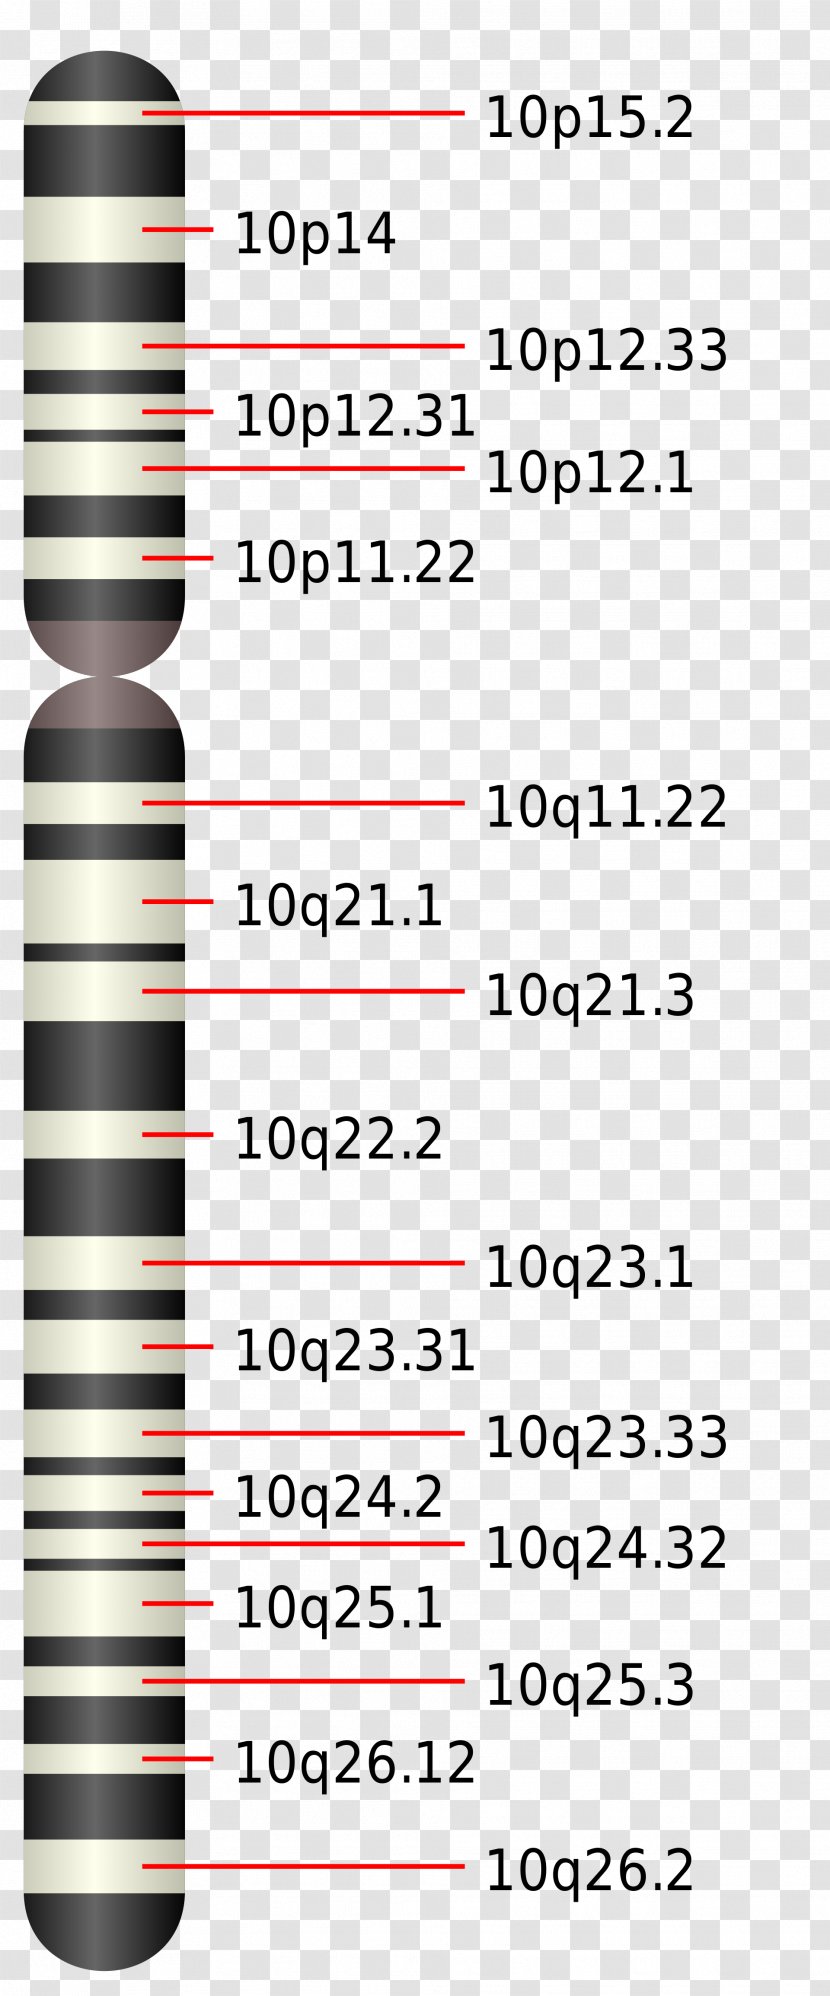 Chromosome 10 19 16 18 - Y - Pten Transparent PNG